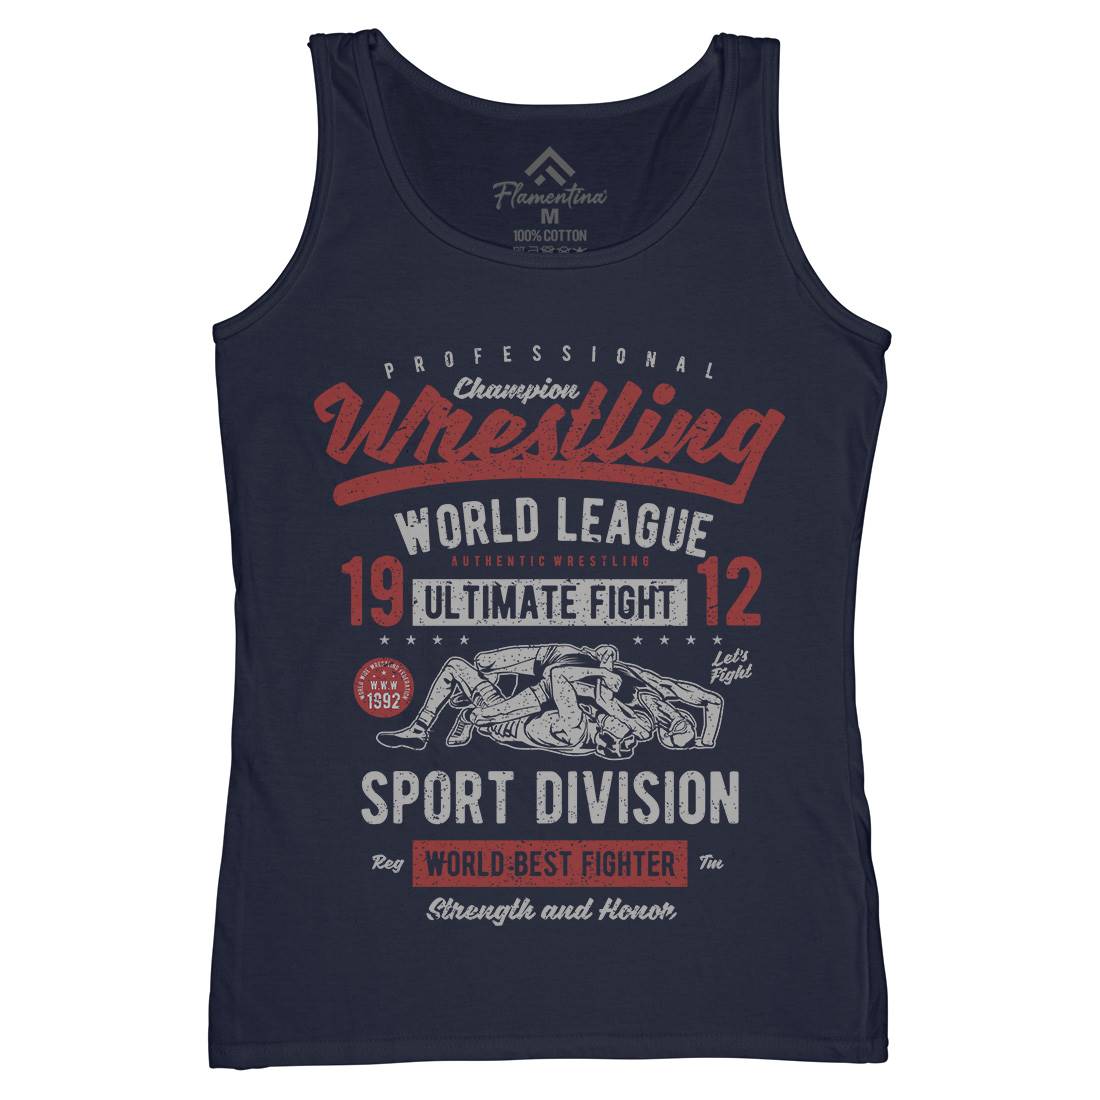 Wrestling Womens Organic Tank Top Vest Sport A798